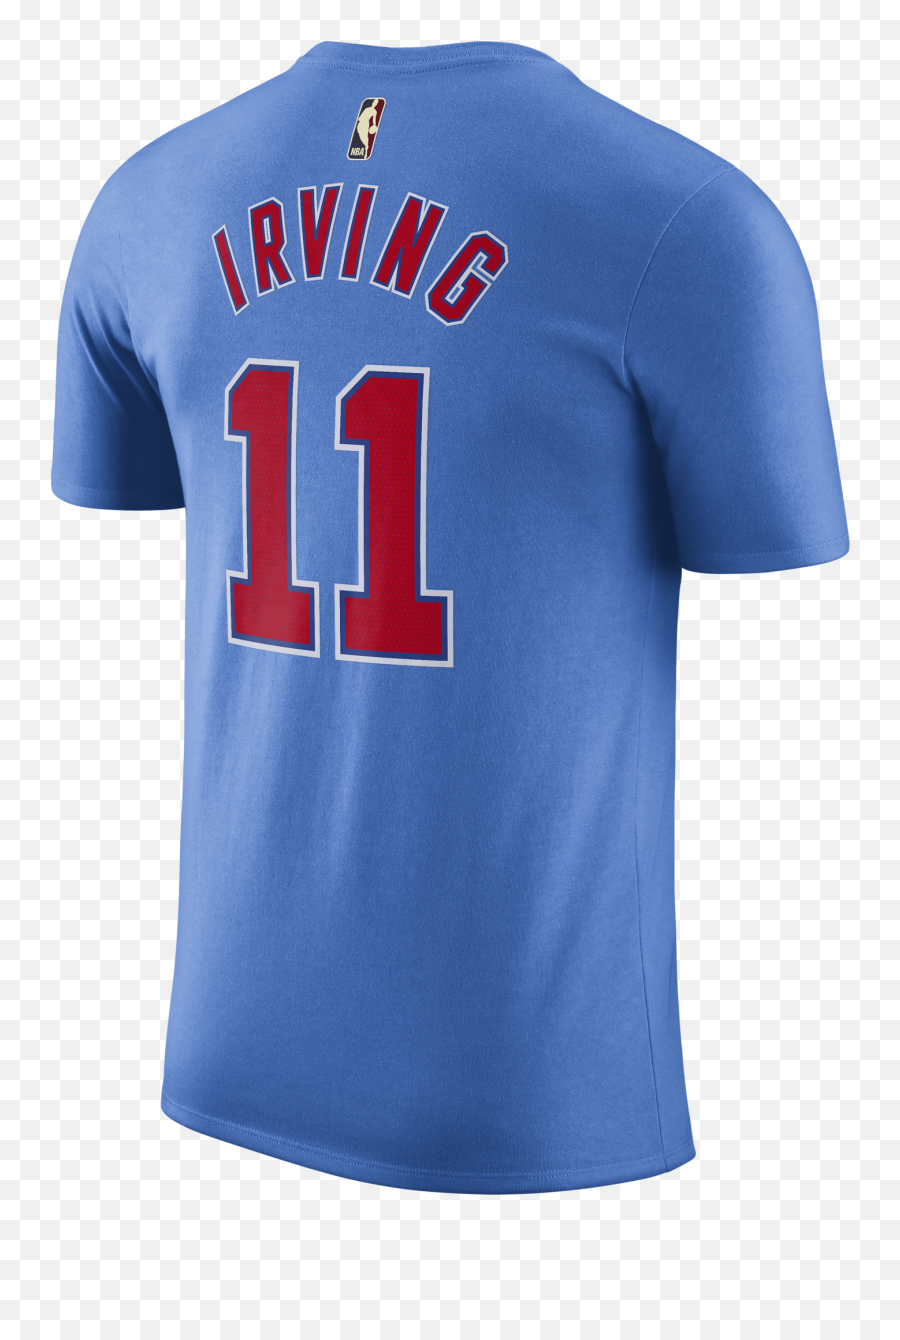 Kyrie Irving - Short Sleeve Emoji,Kyrie Irving Logo